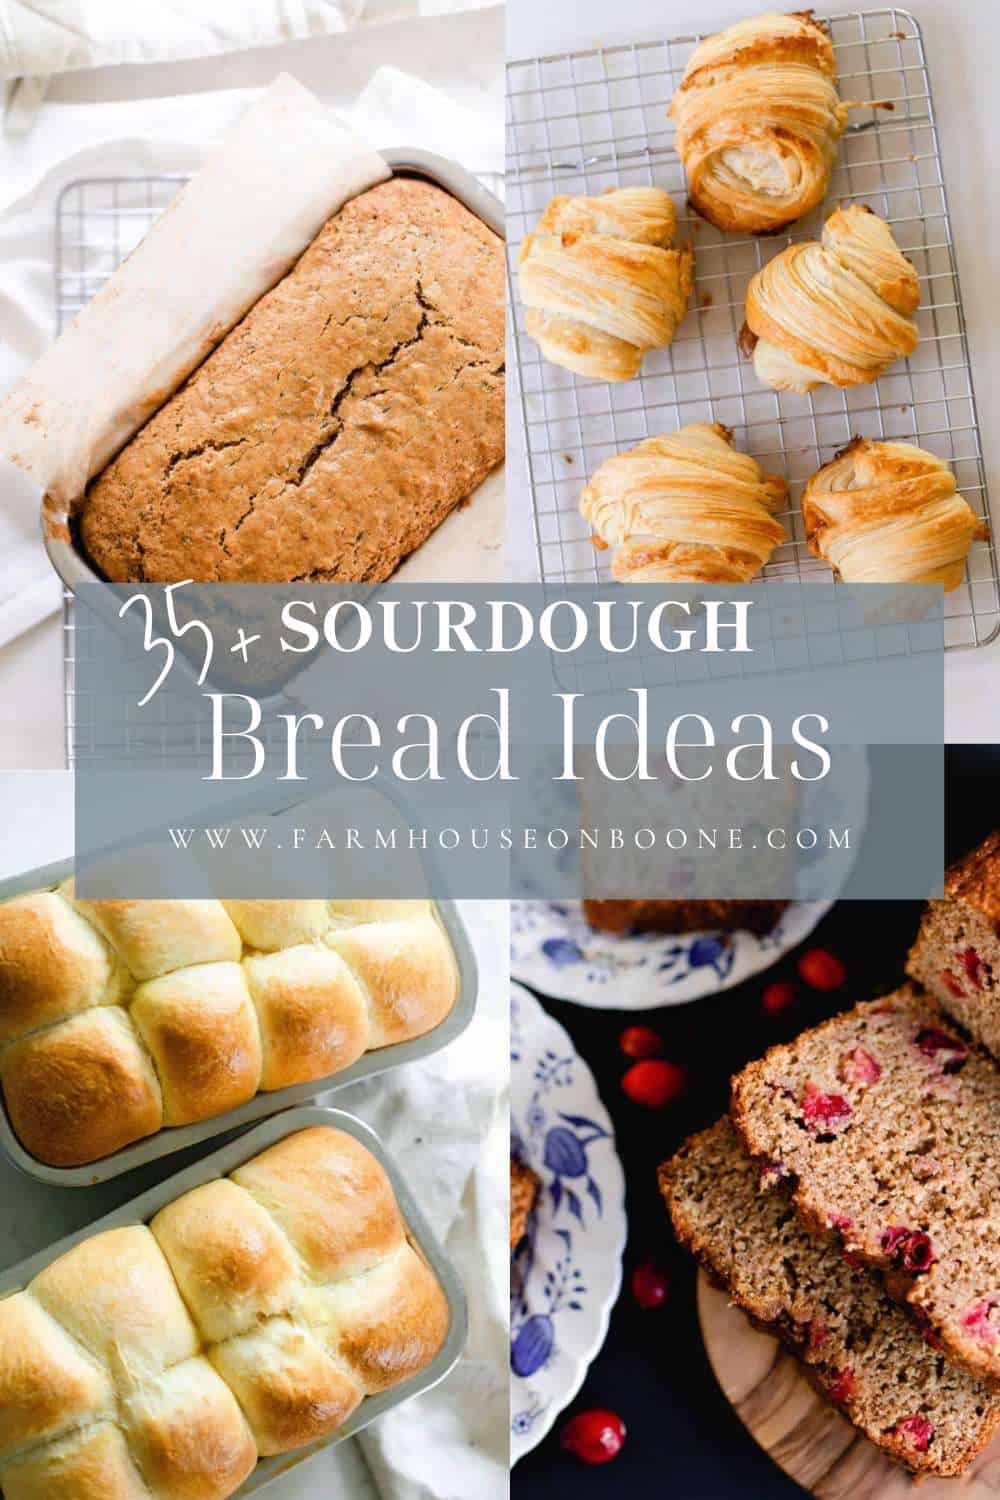 https://www.farmhouseonboone.com/wp-content/uploads/2023/02/Sourdough-bread-ideas.jpg